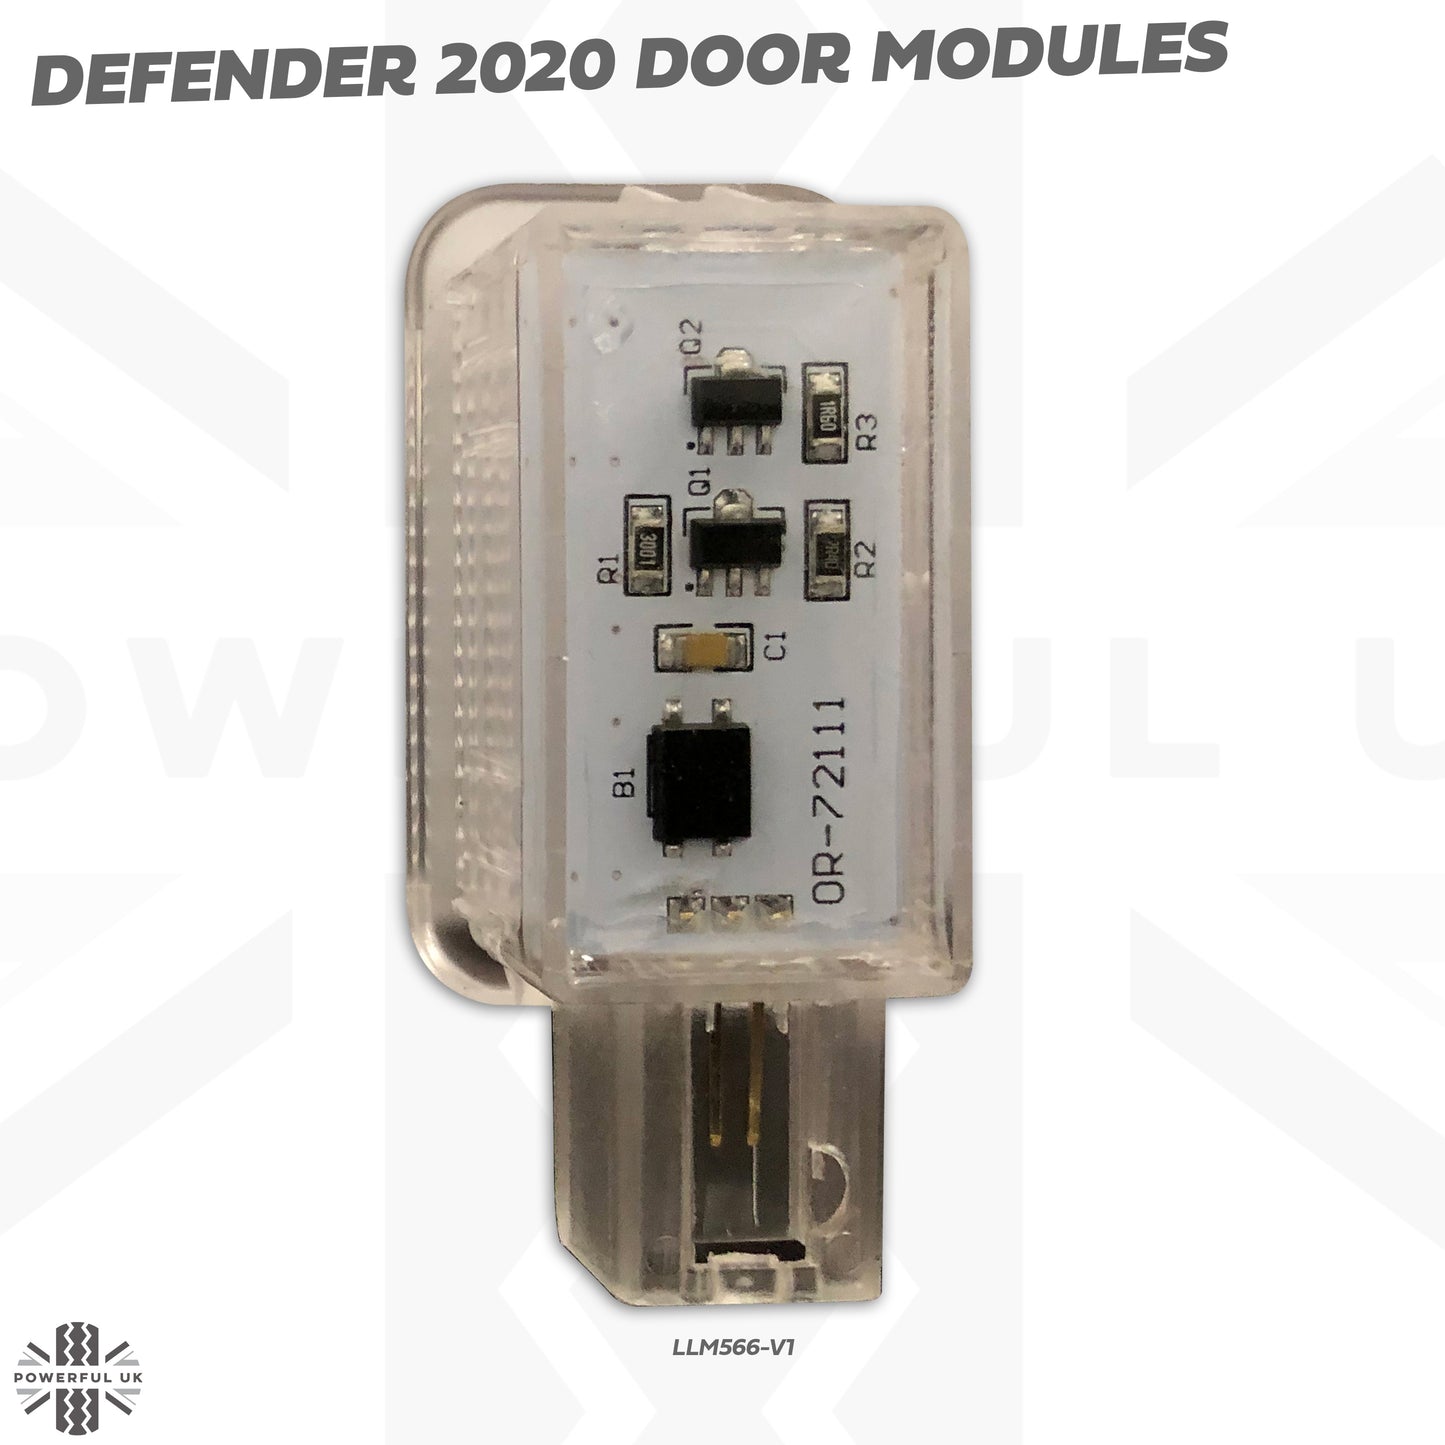 LED Door Welcome Lights - 4pc - White - for Land Rover Defender L663 (110/130)